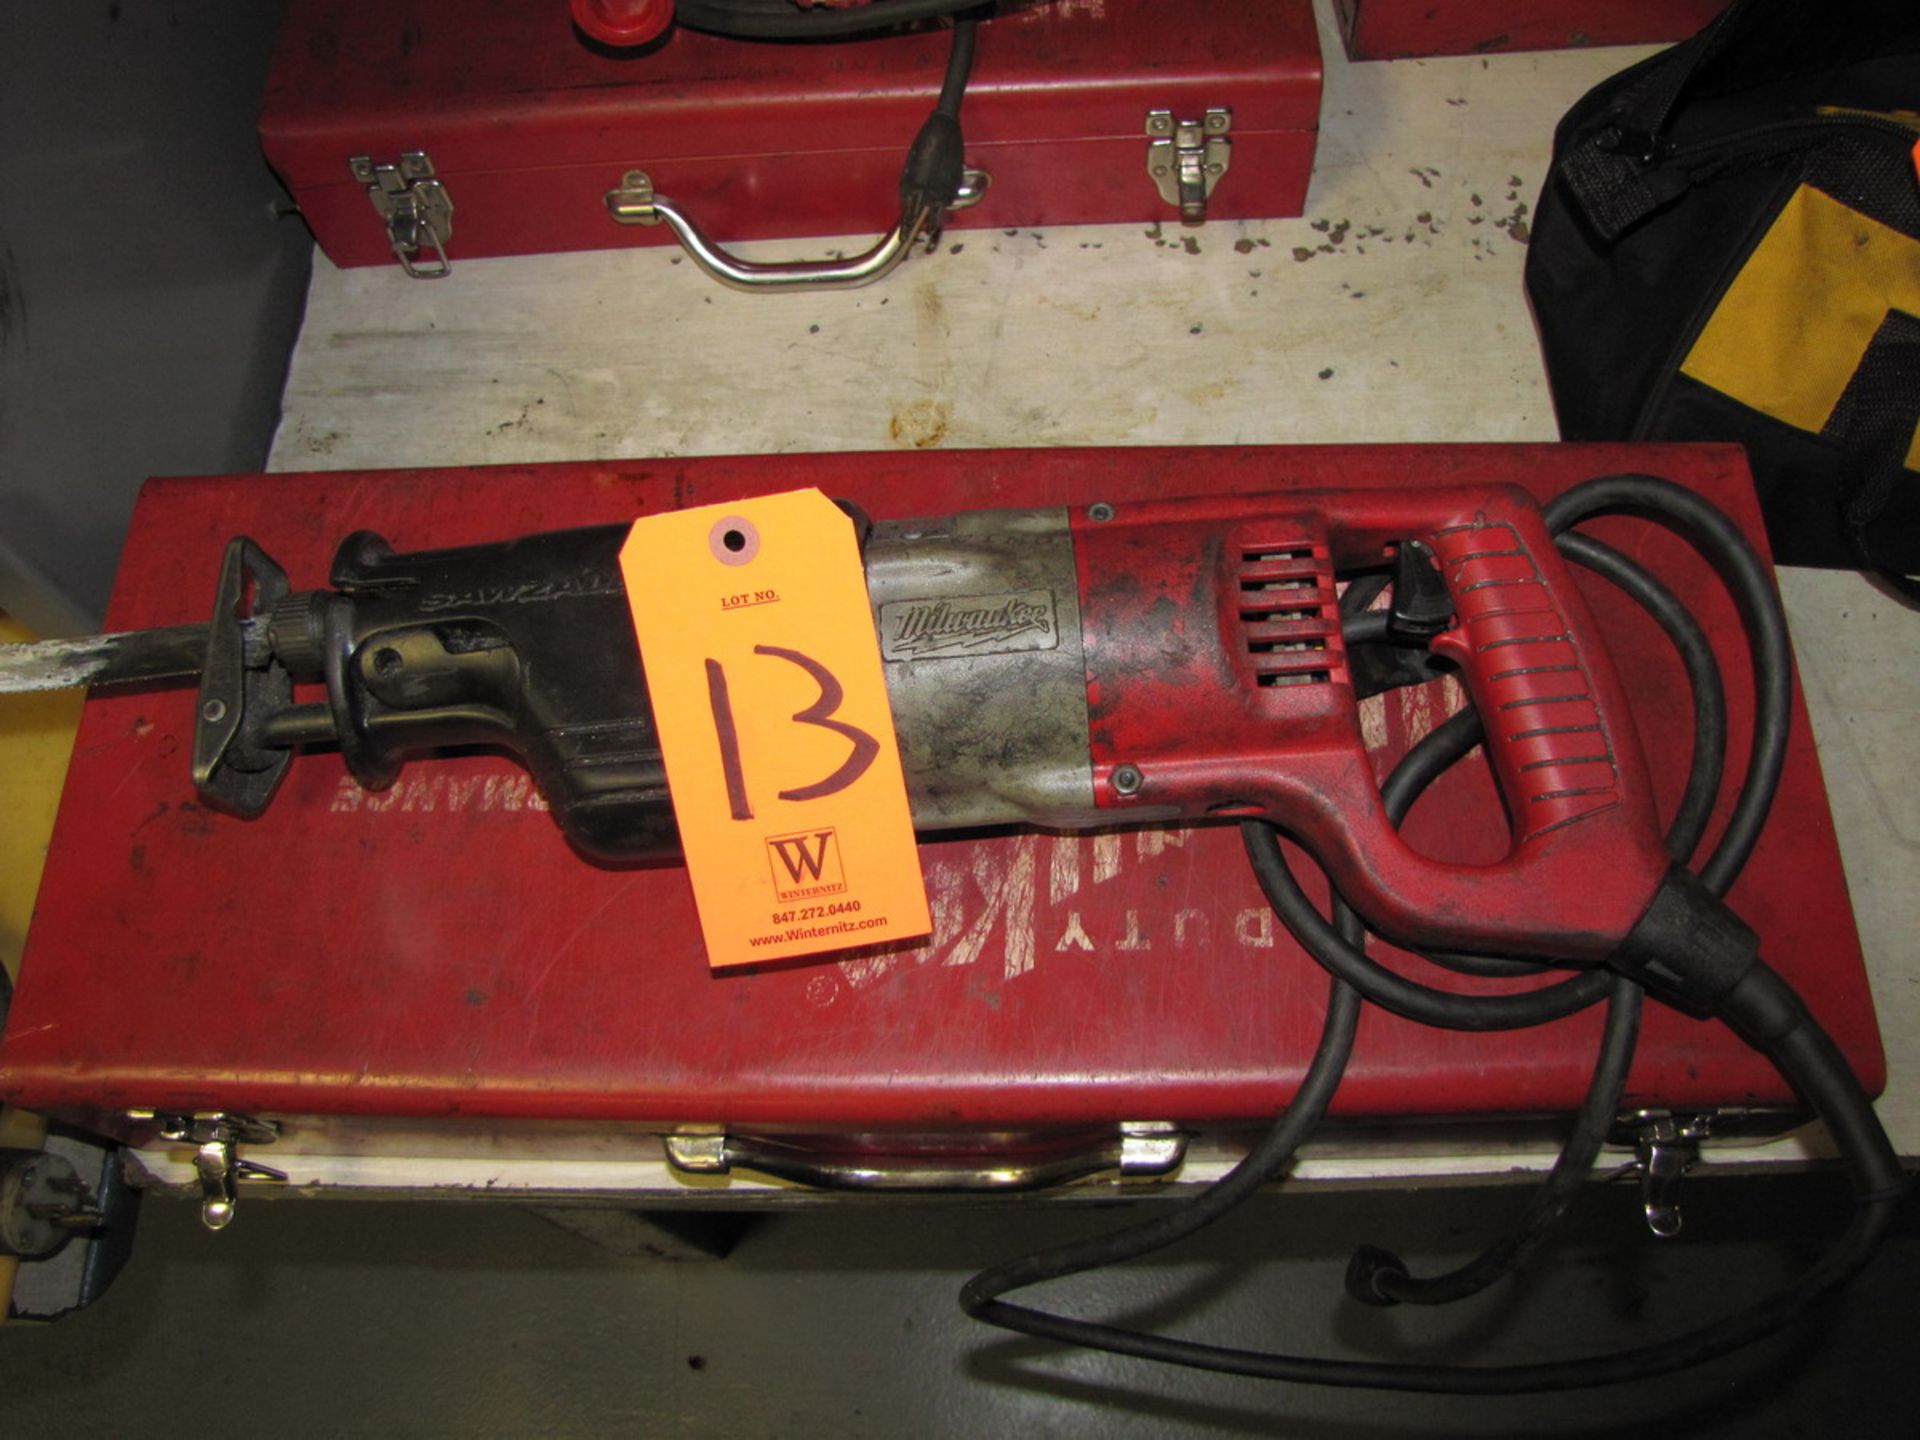 Milwaukee Model 6527-1 Sawzall Electric Reciprocating Saw, 0-2800 SPM (Plant #1)